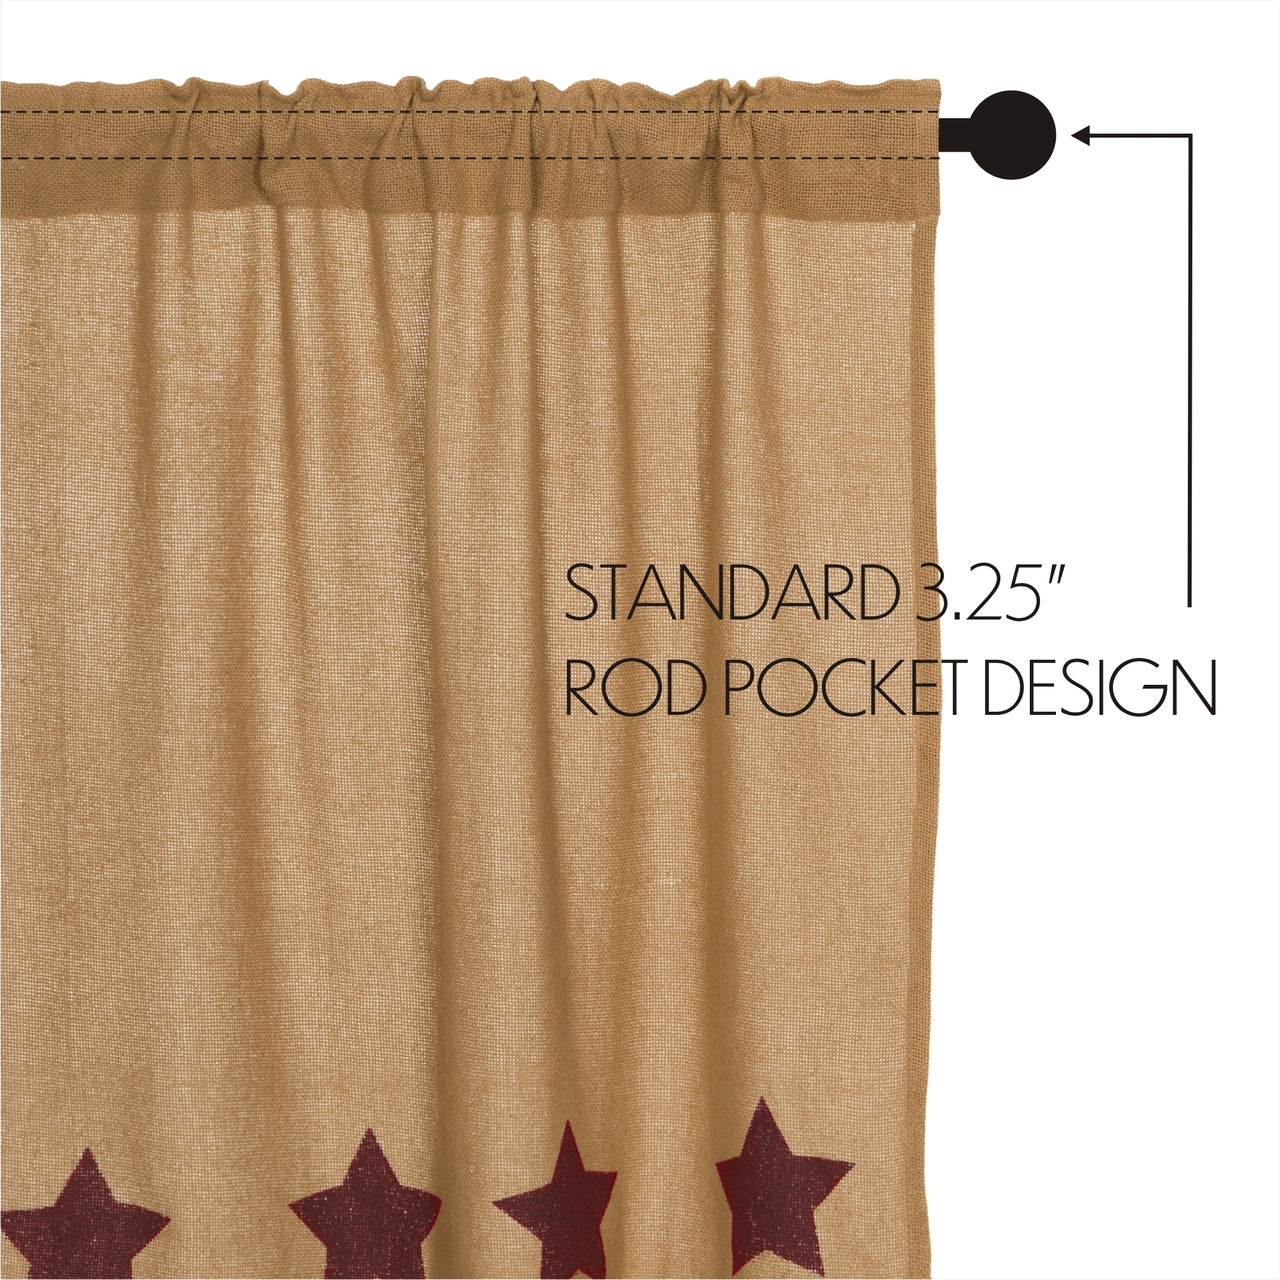 Burlap w/Burgundy Stencil Stars Prairie Short Panel Curtain Set 63x36x18